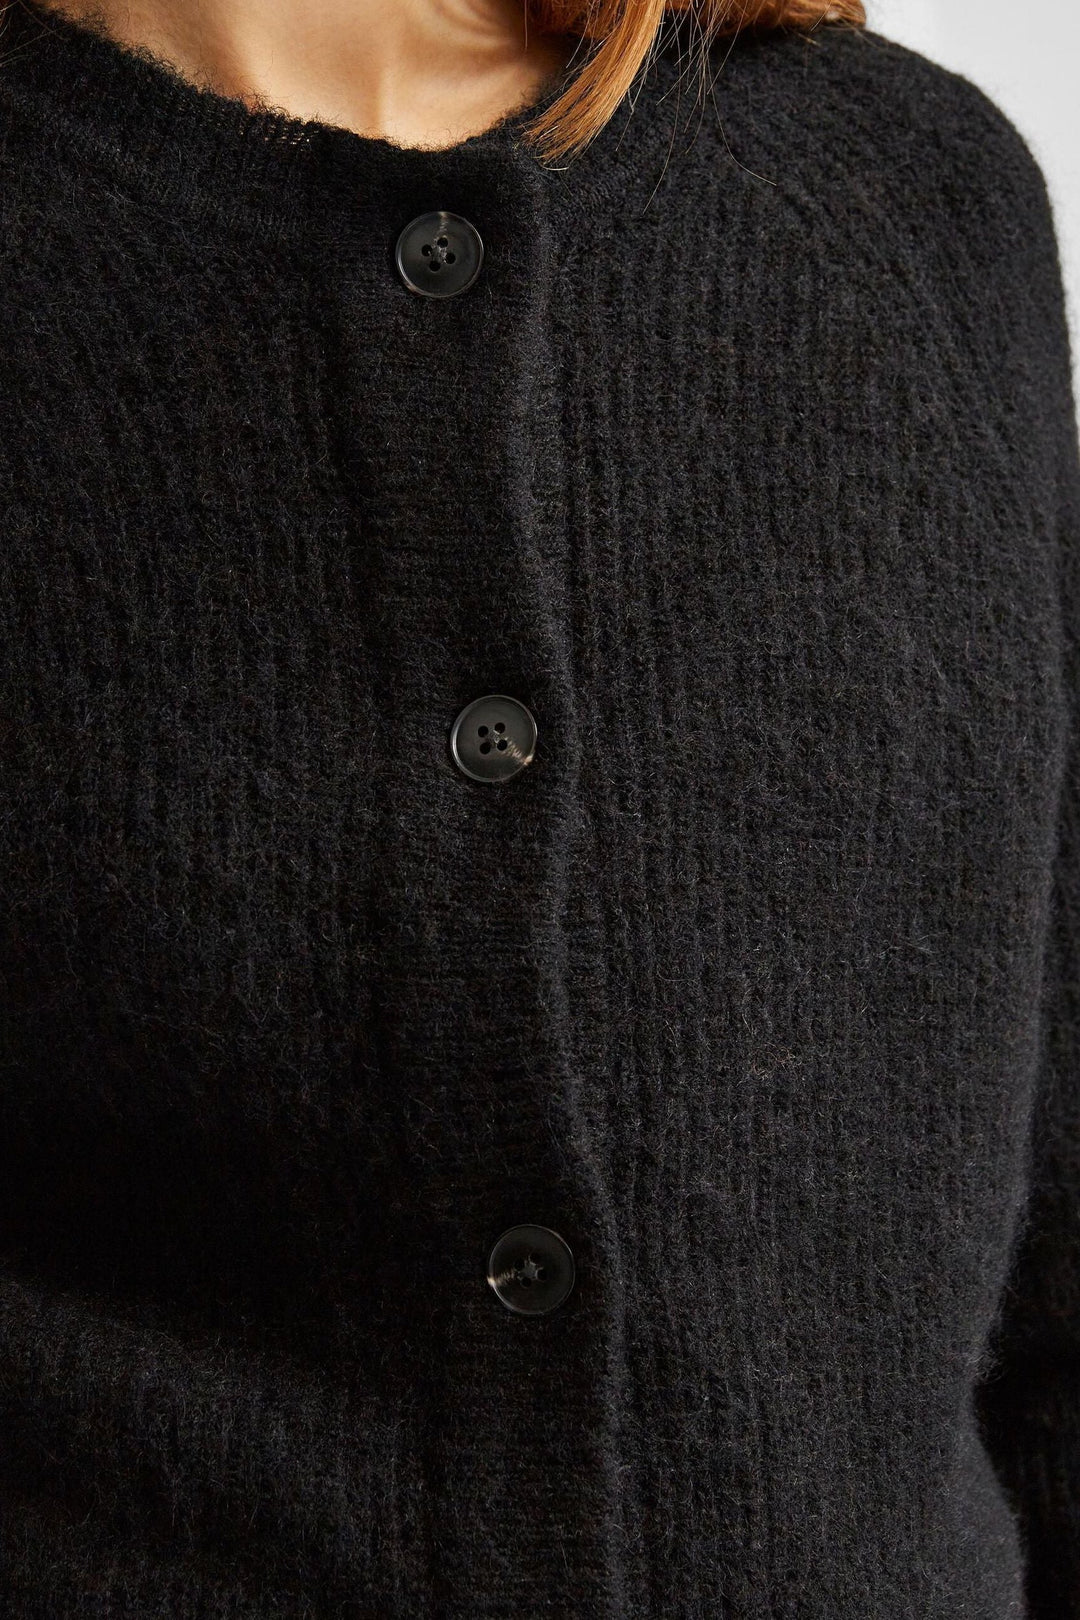 Selected Femme | Cardigan | Lulu ls knit short, black